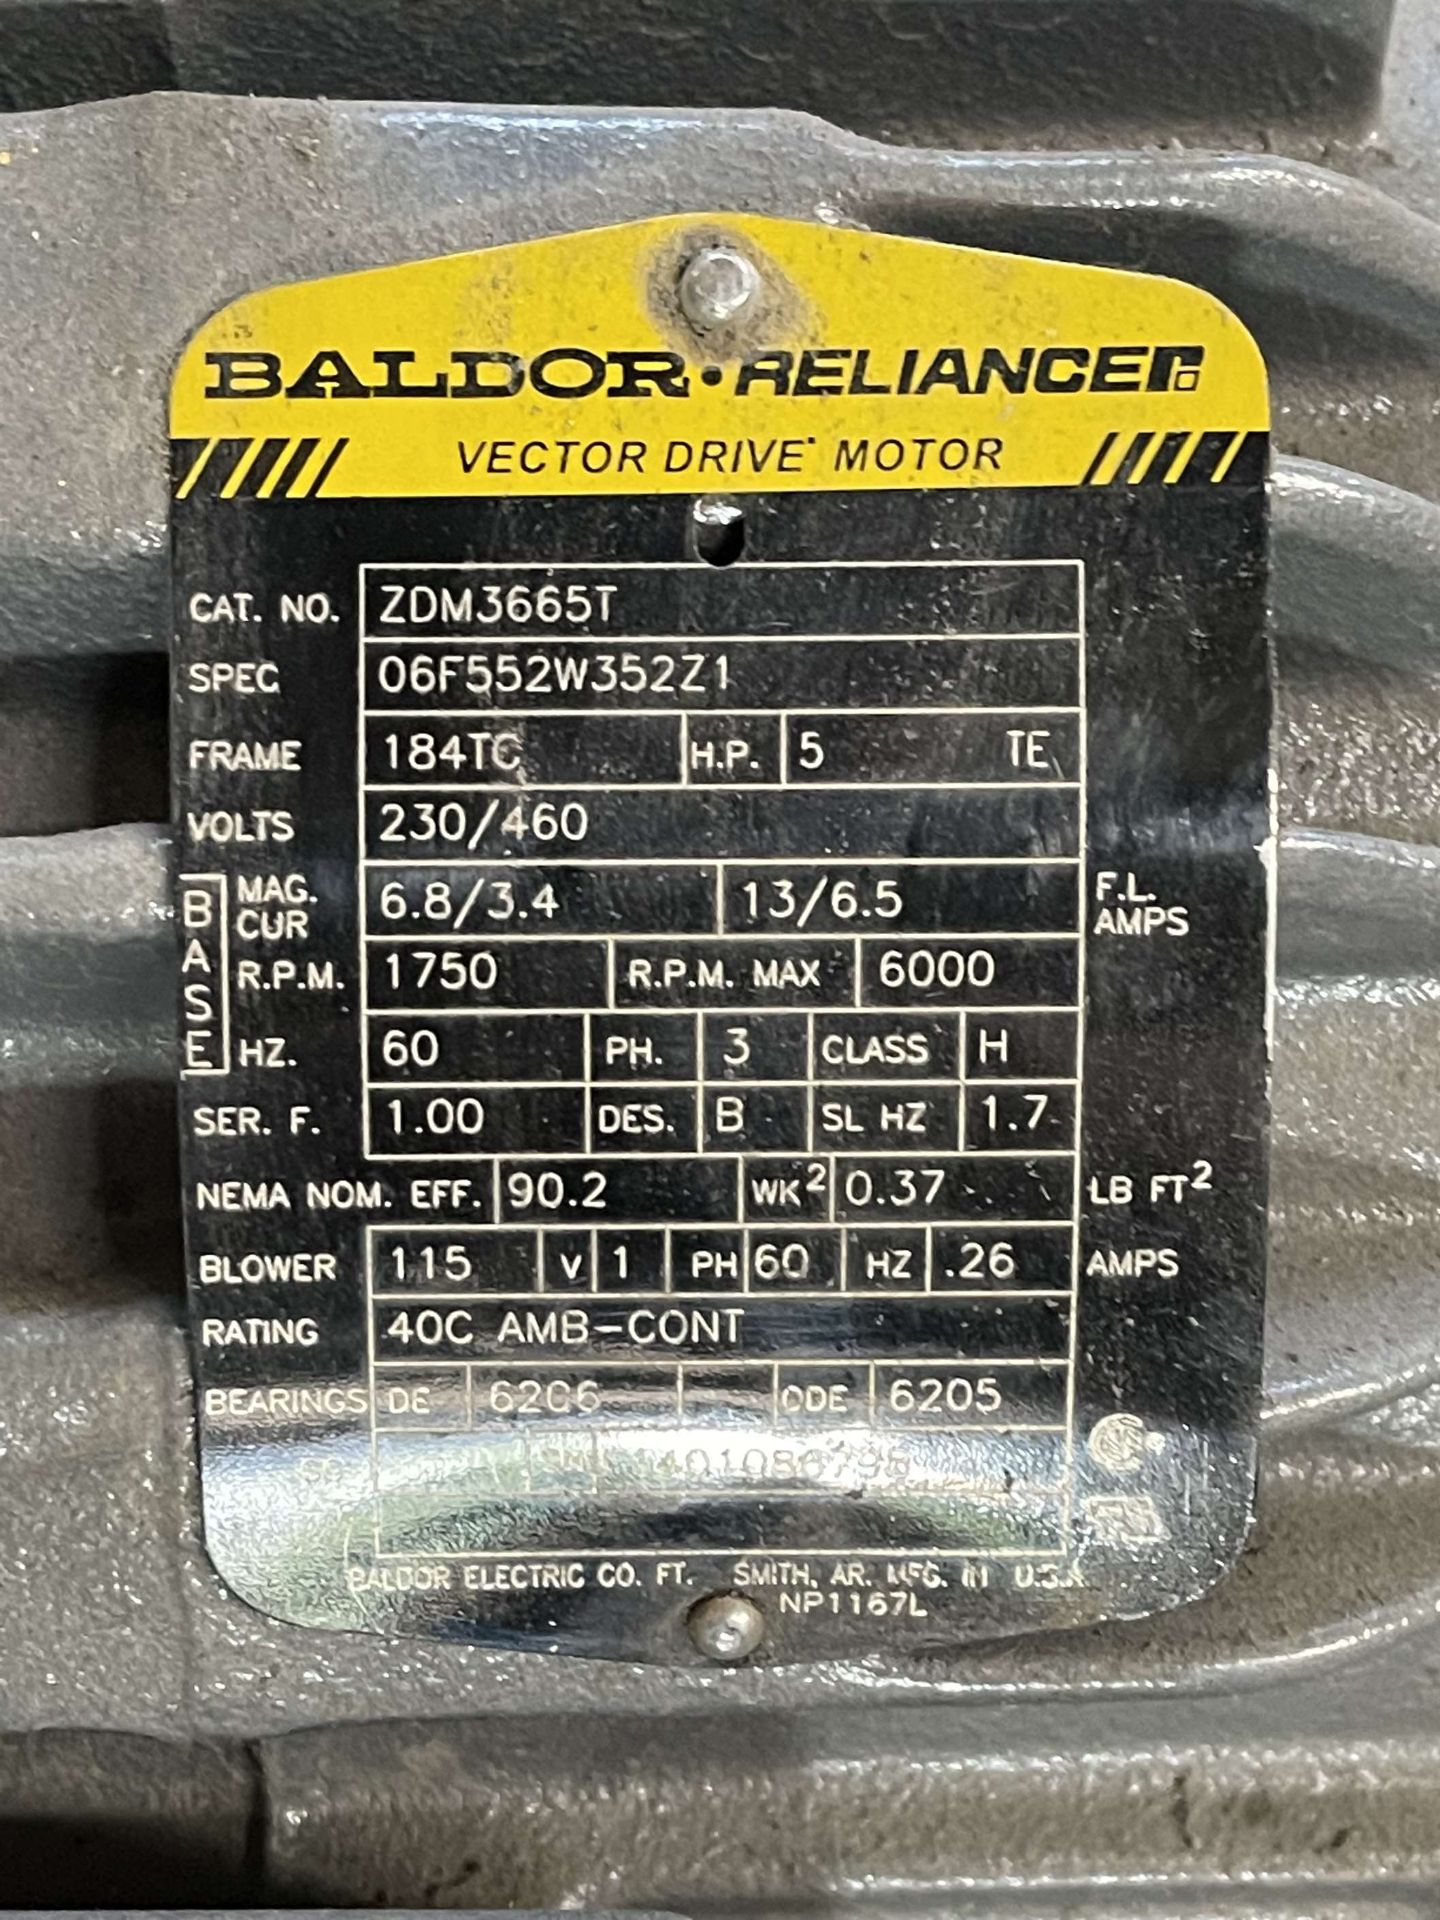 BALDOR 5 HP Vector Drive Motor w/ Baldor 9.76:1 Gear Reducer - Image 4 of 5